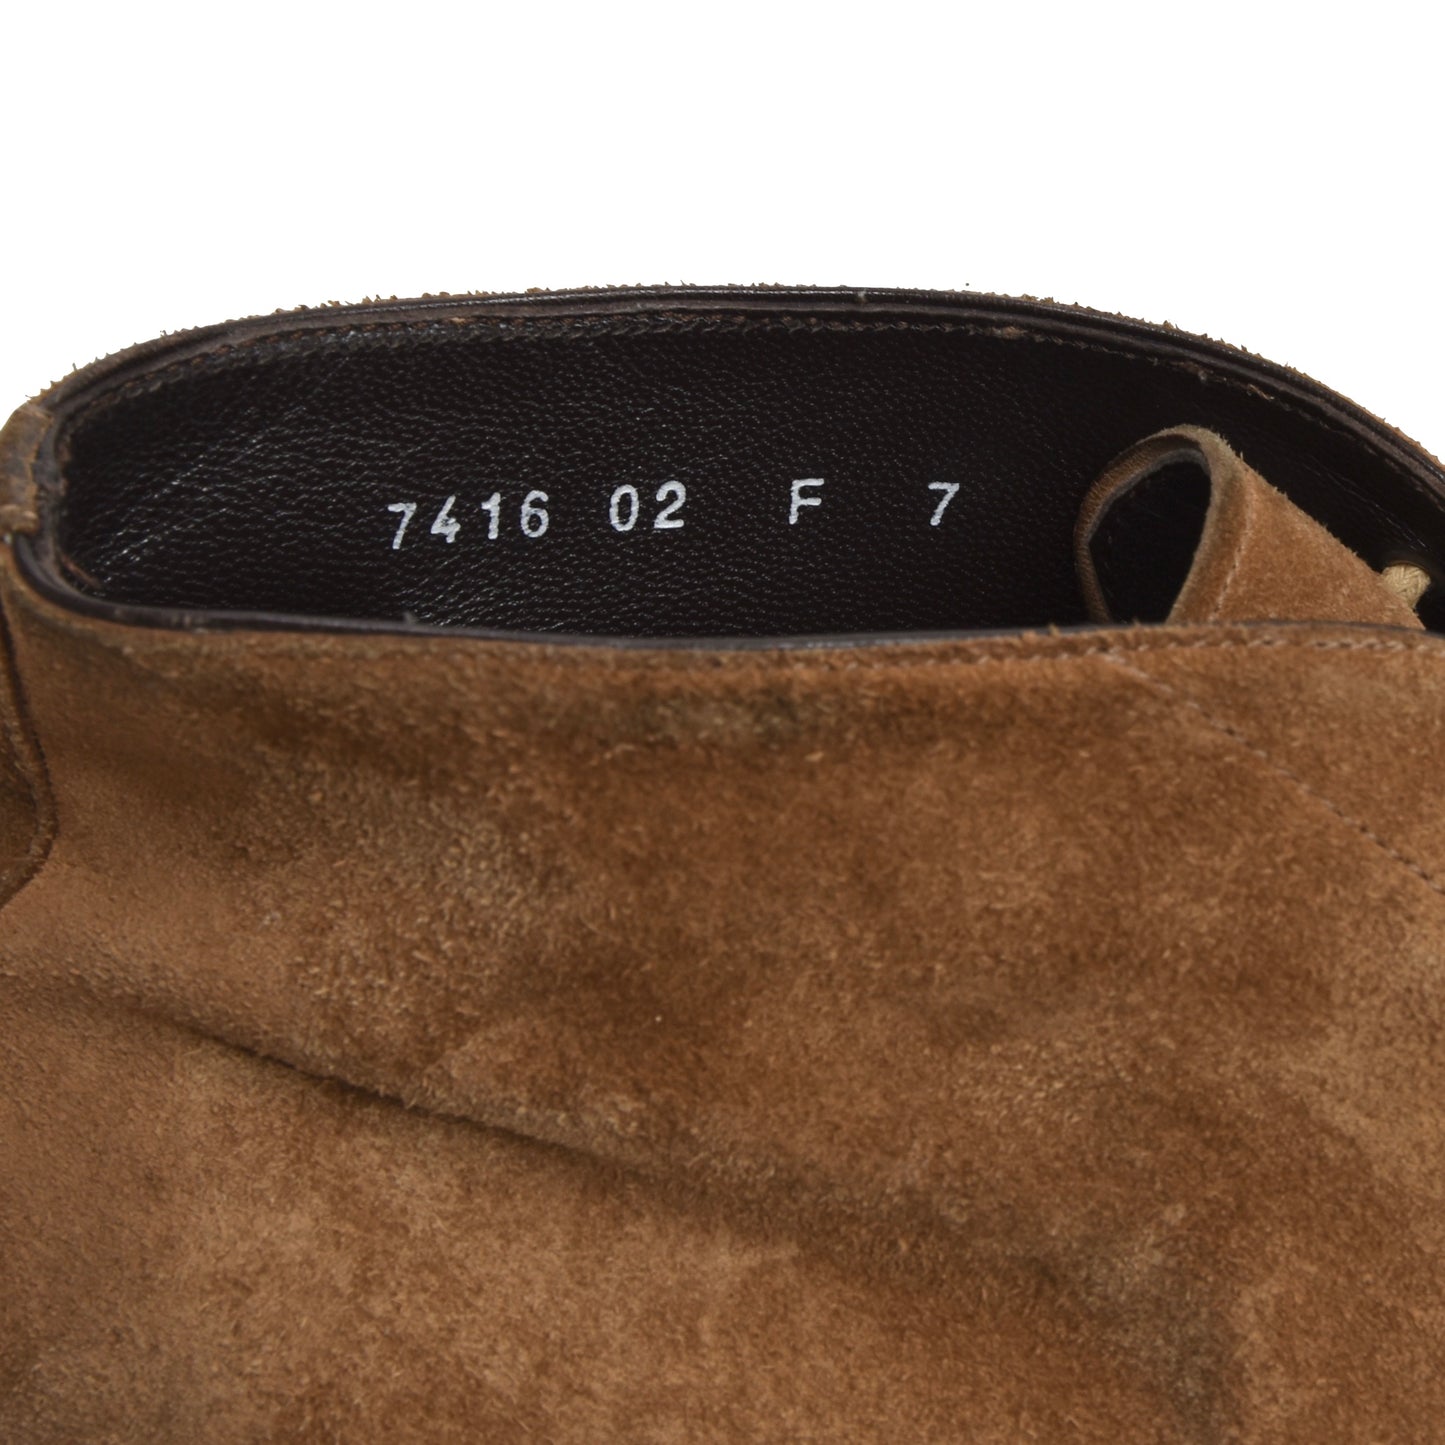 Santoni Suede Boots Size 7F - Tan